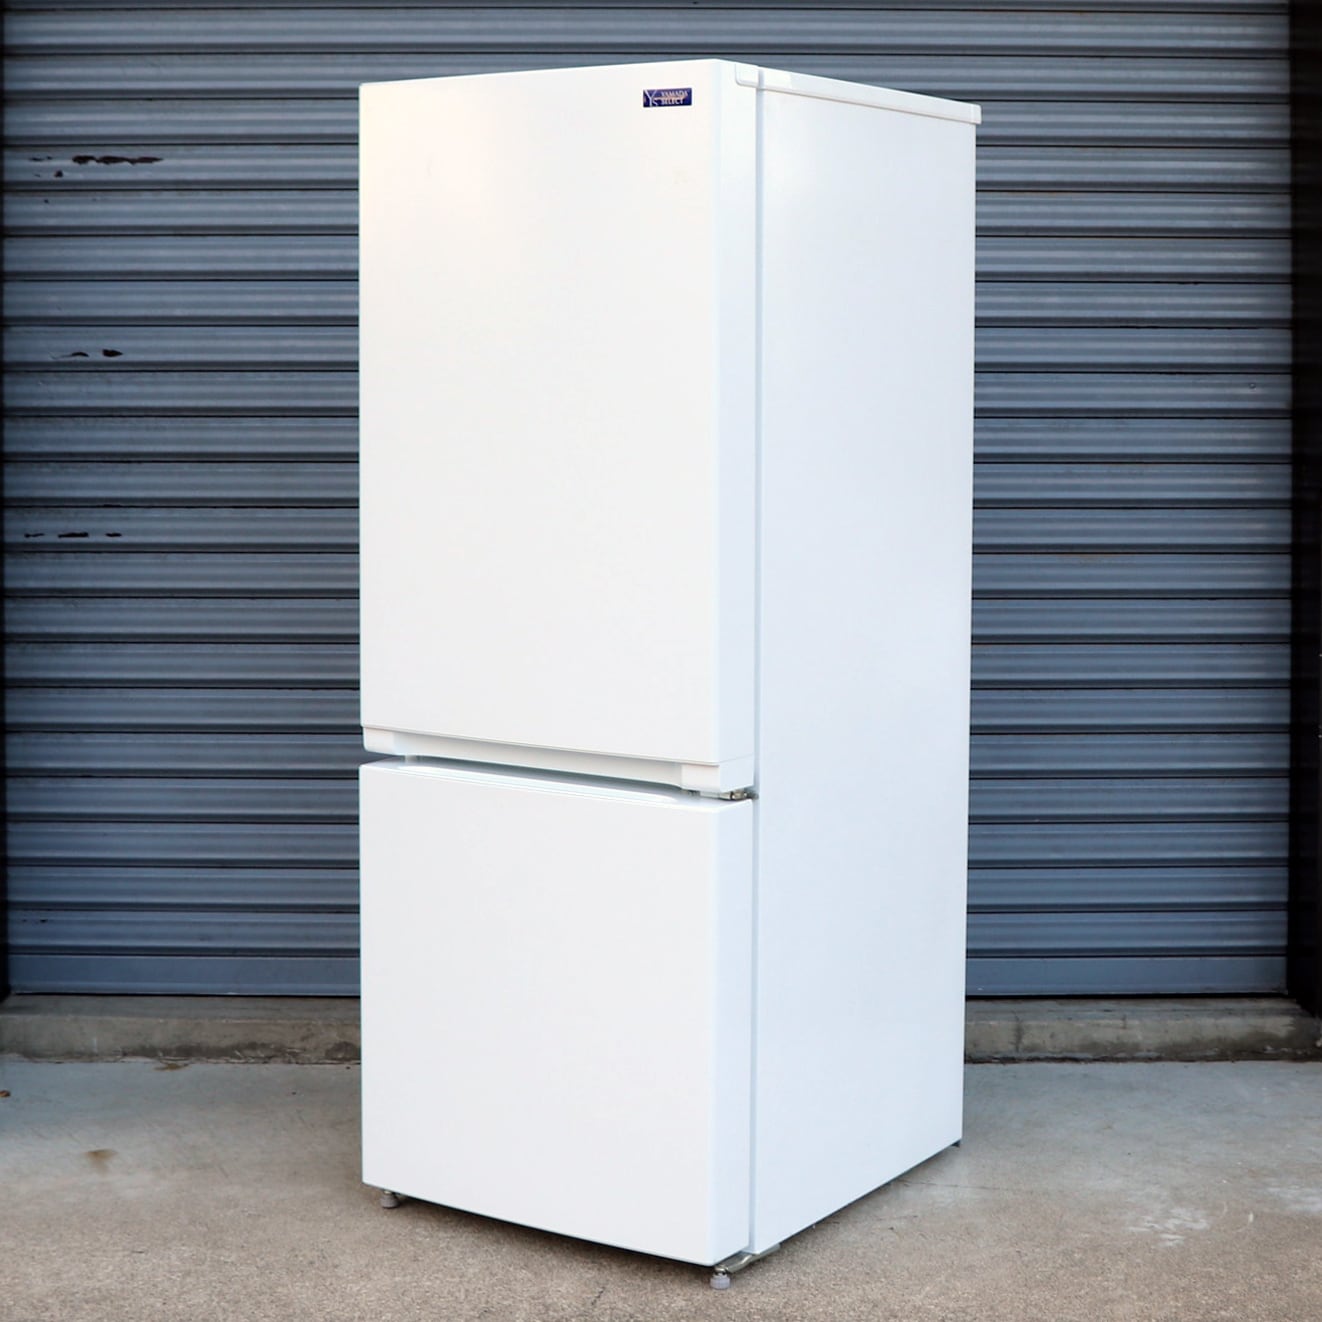 YAMADA・ヤマダ電機156L・2ドア・冷凍冷蔵庫・YRZ-F15G1・2020年製・No.200708-623・梱包サイズ260